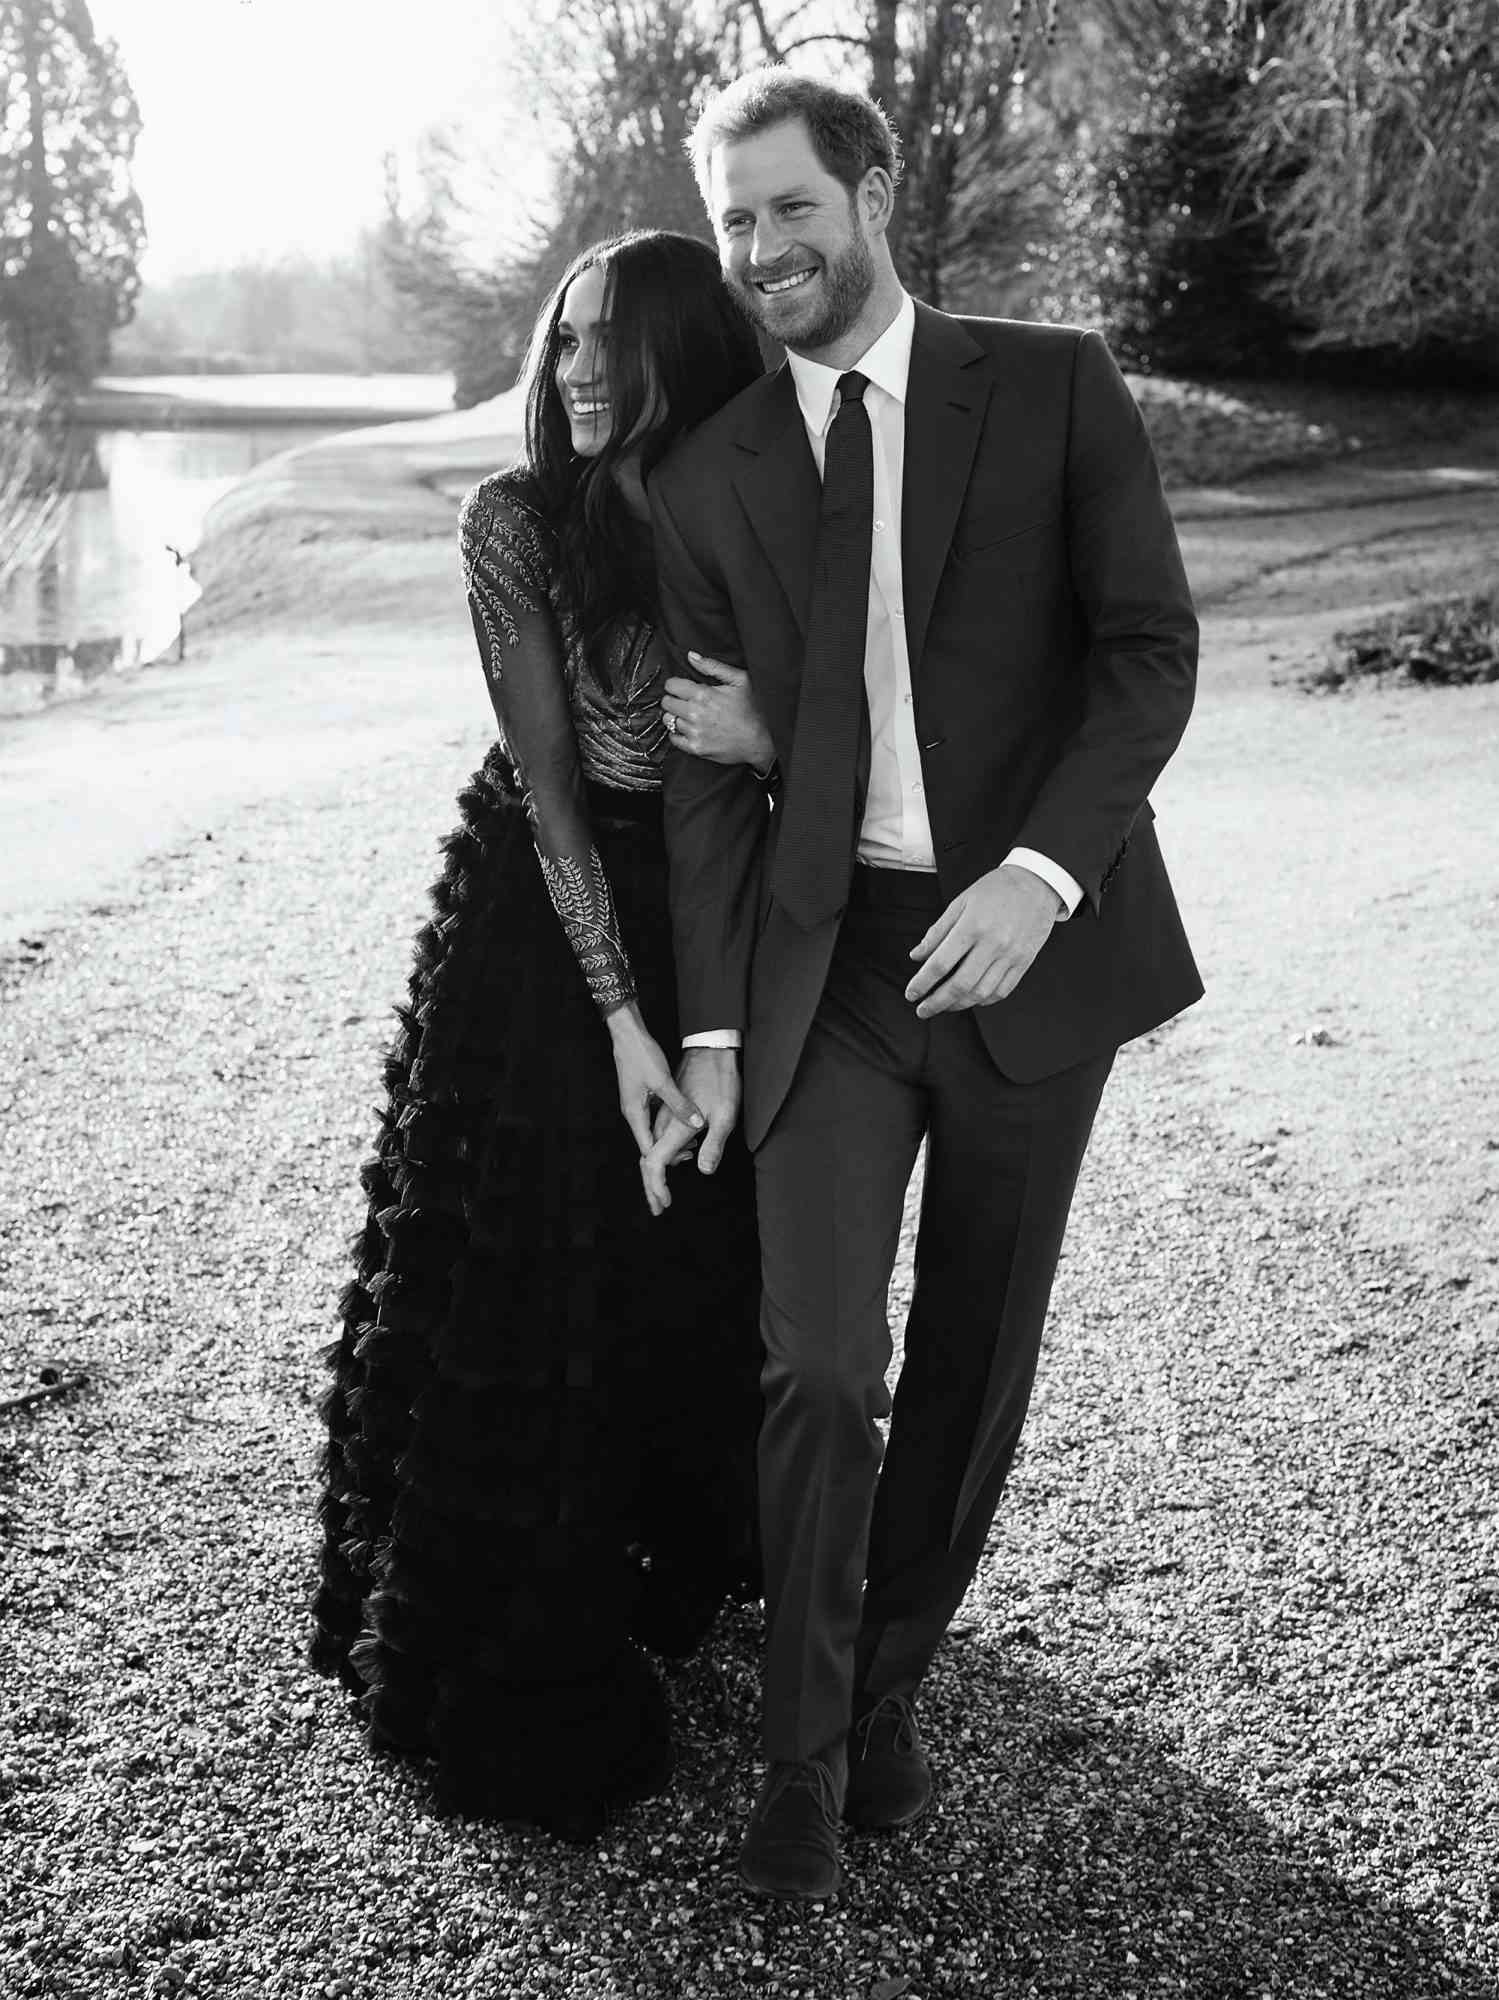 Prince Harry and Meghan Markle official engagement portraits, Windsor, United Kingdom - 21 Dec 2017